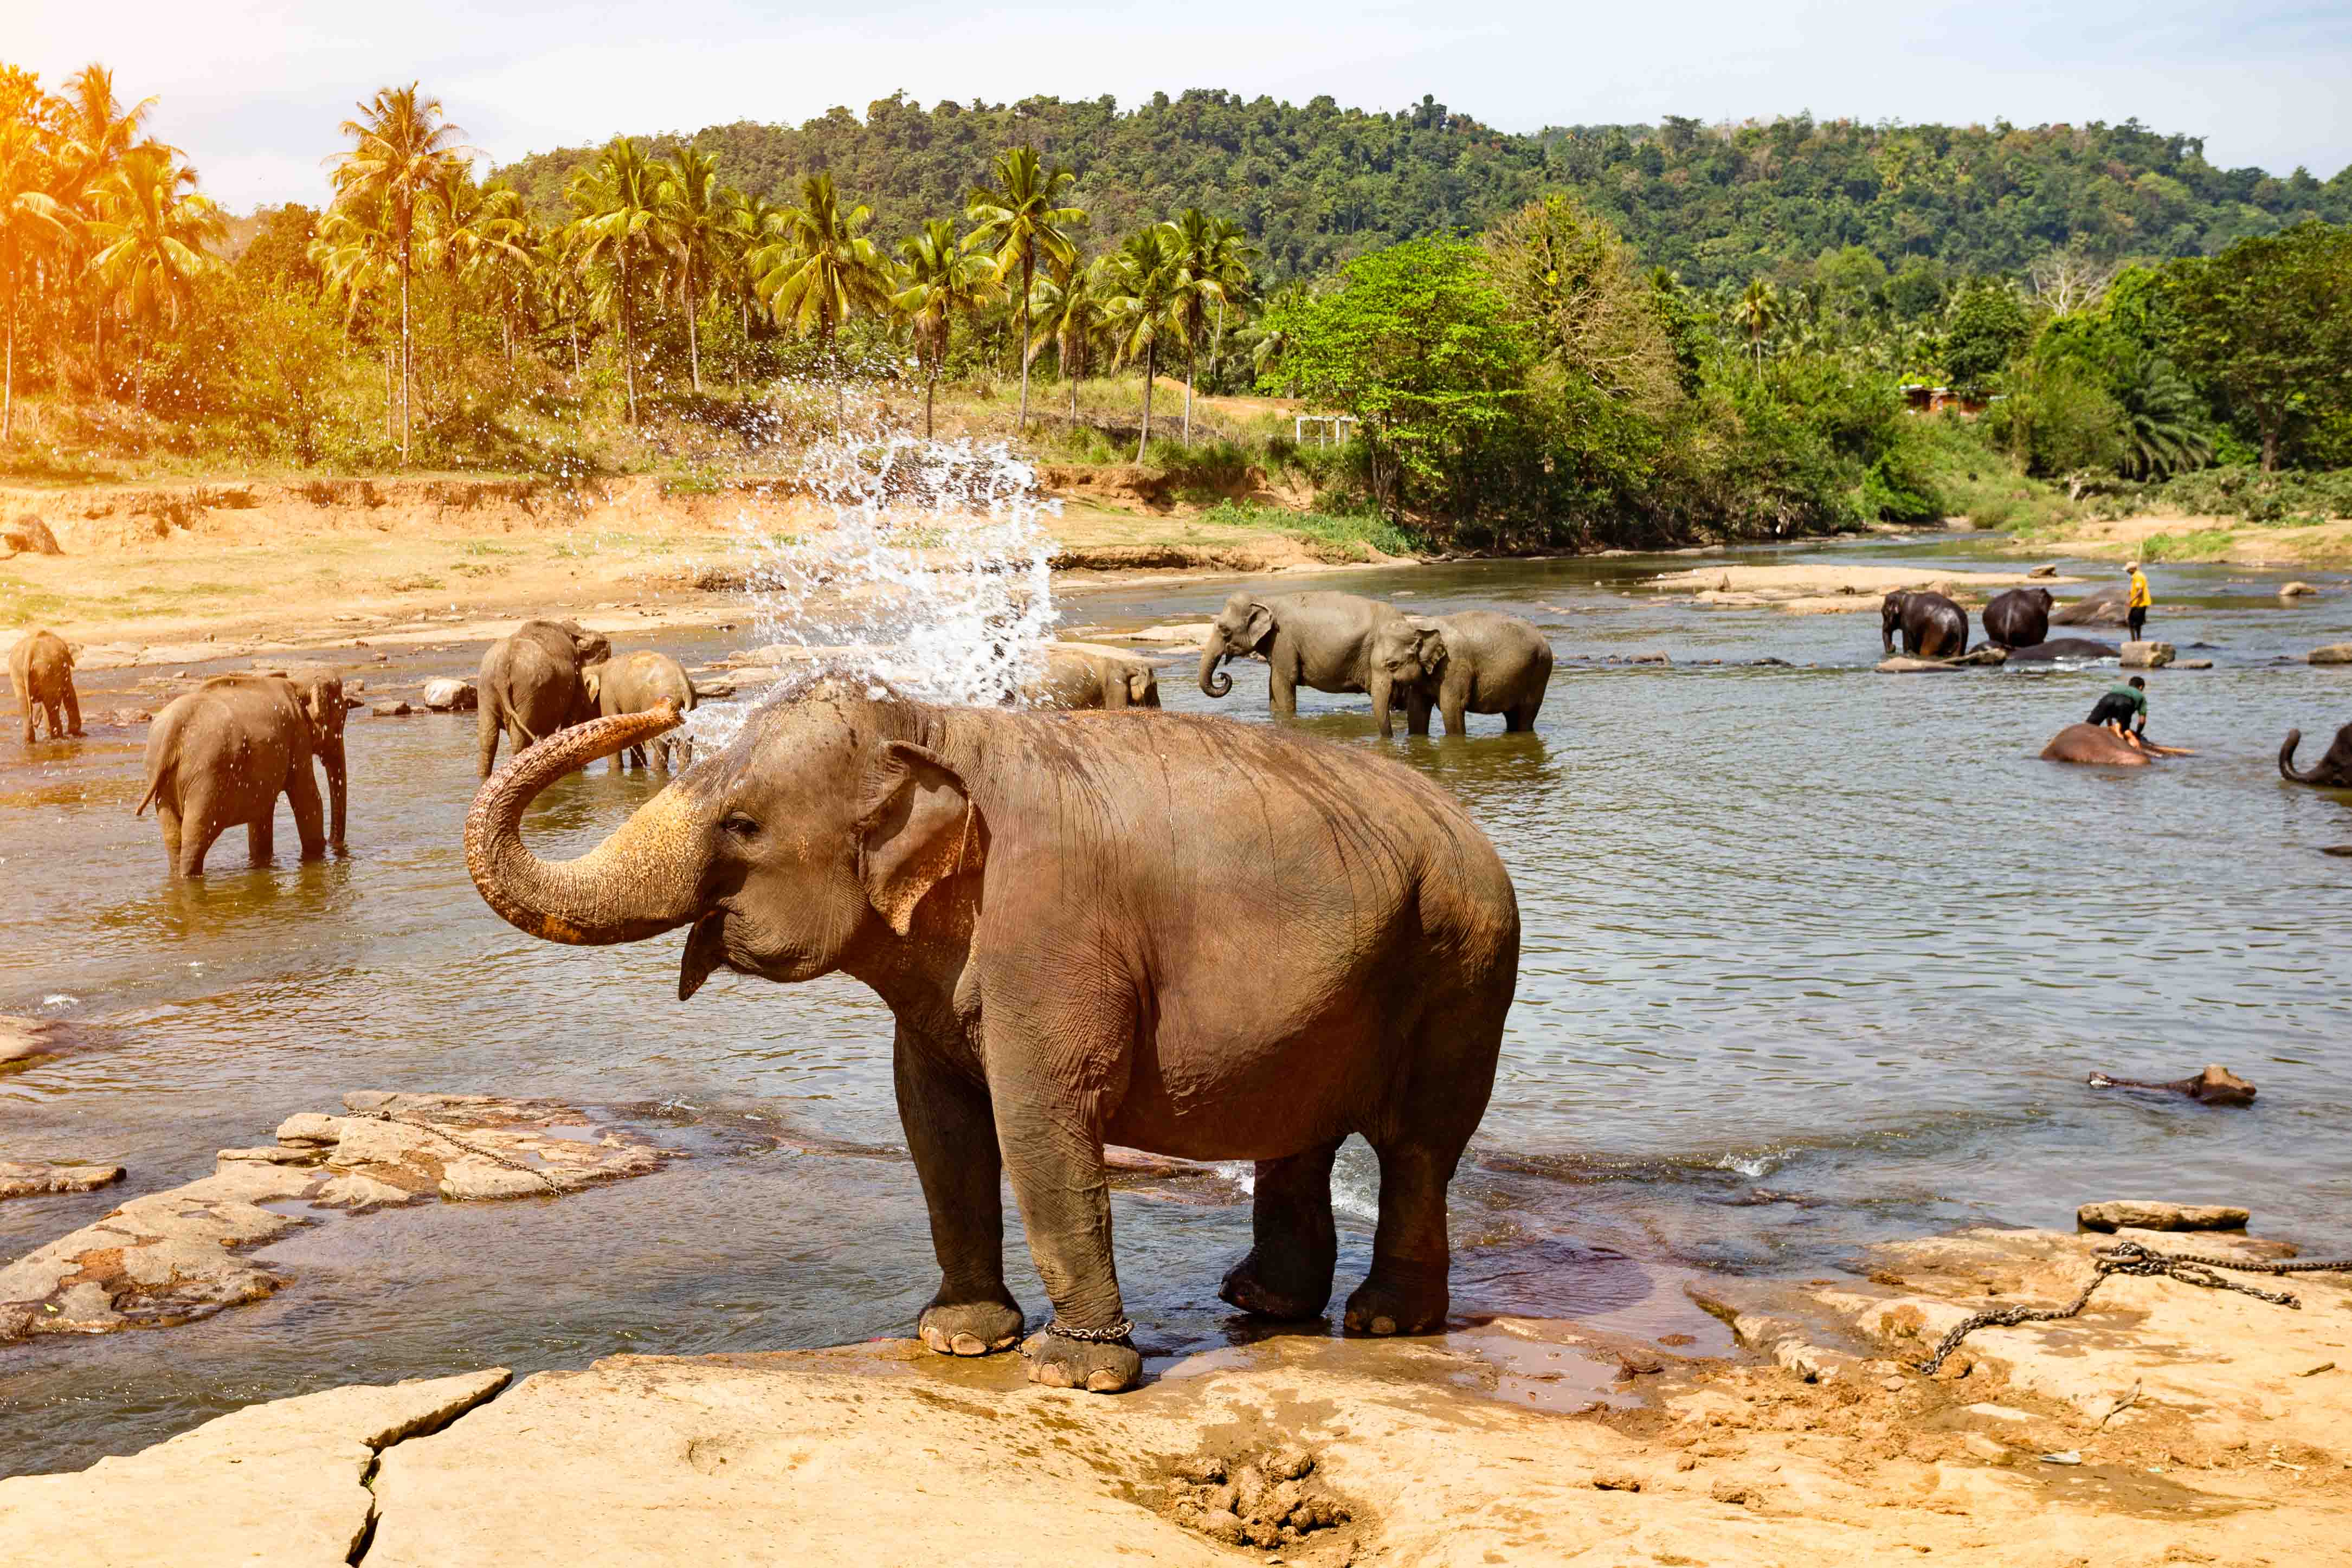 Elephants bathing in the river.